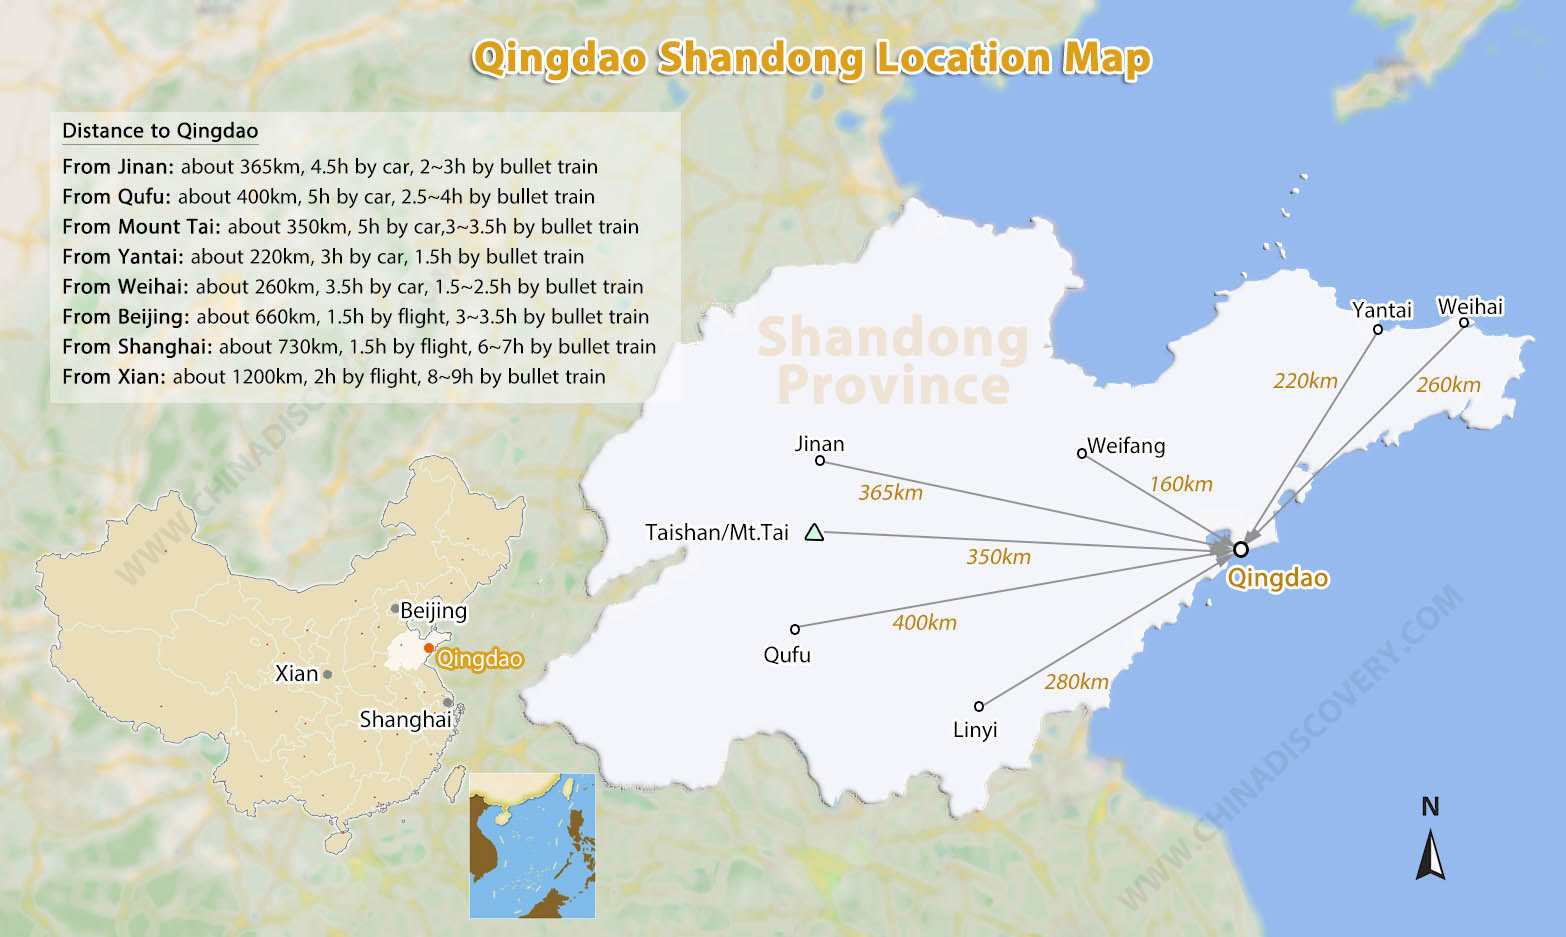 Qingdao Shandong Location Map